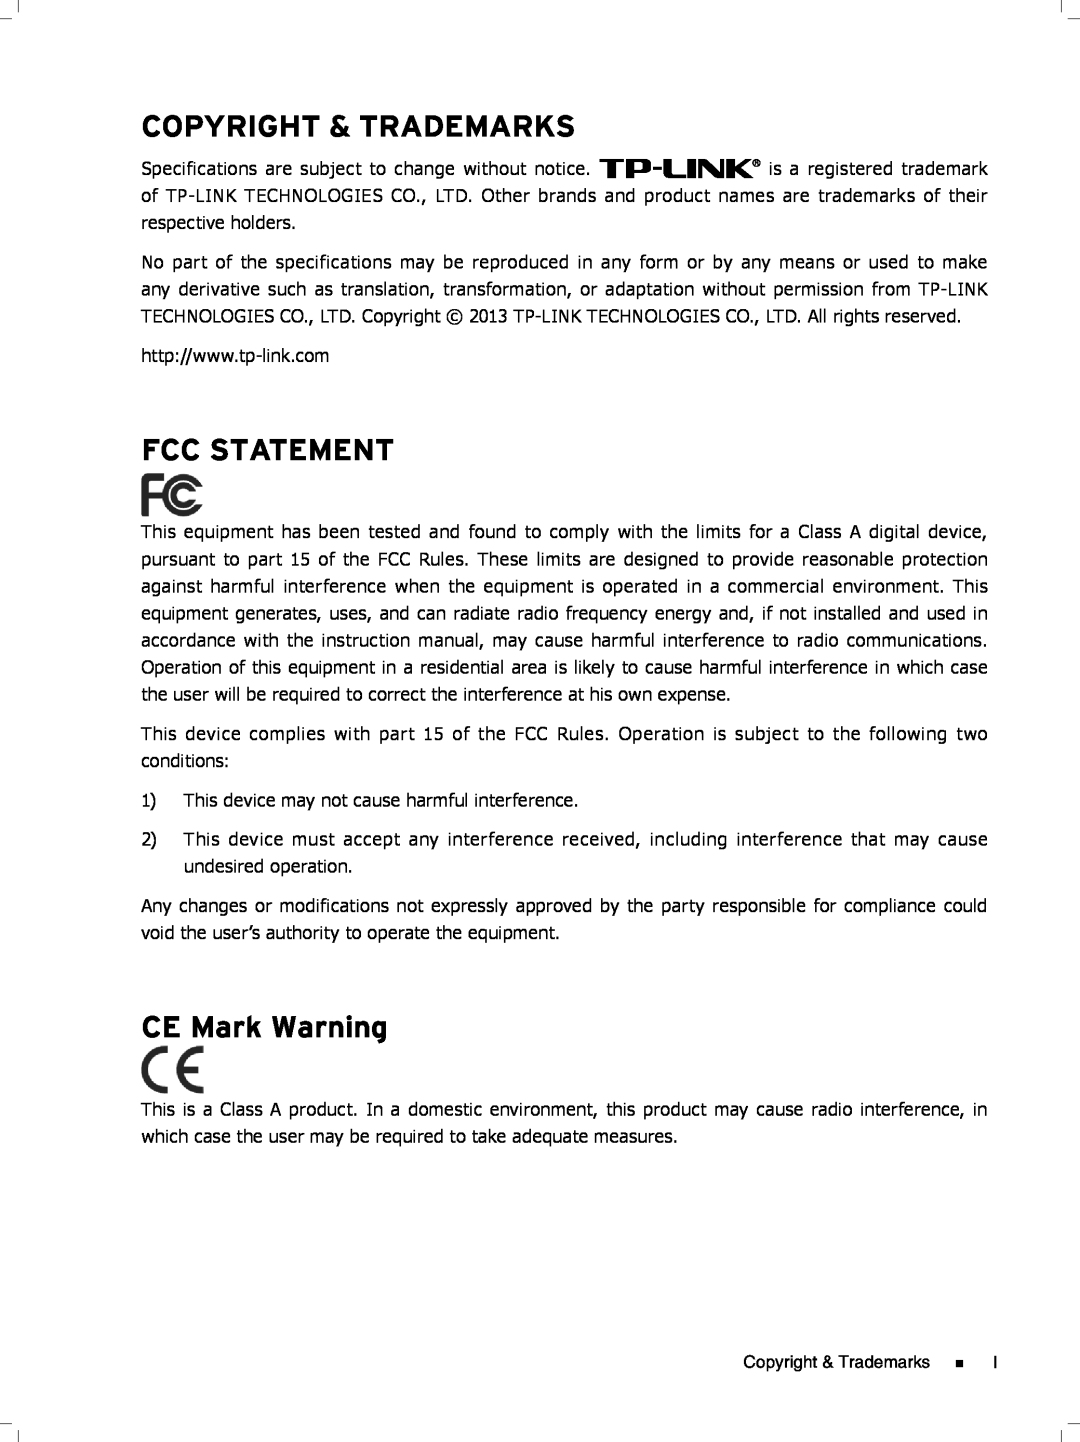 TP-Link tl-sg1048 manual Copyright & Trademarks, Fcc Statement, CE Mark Warning 